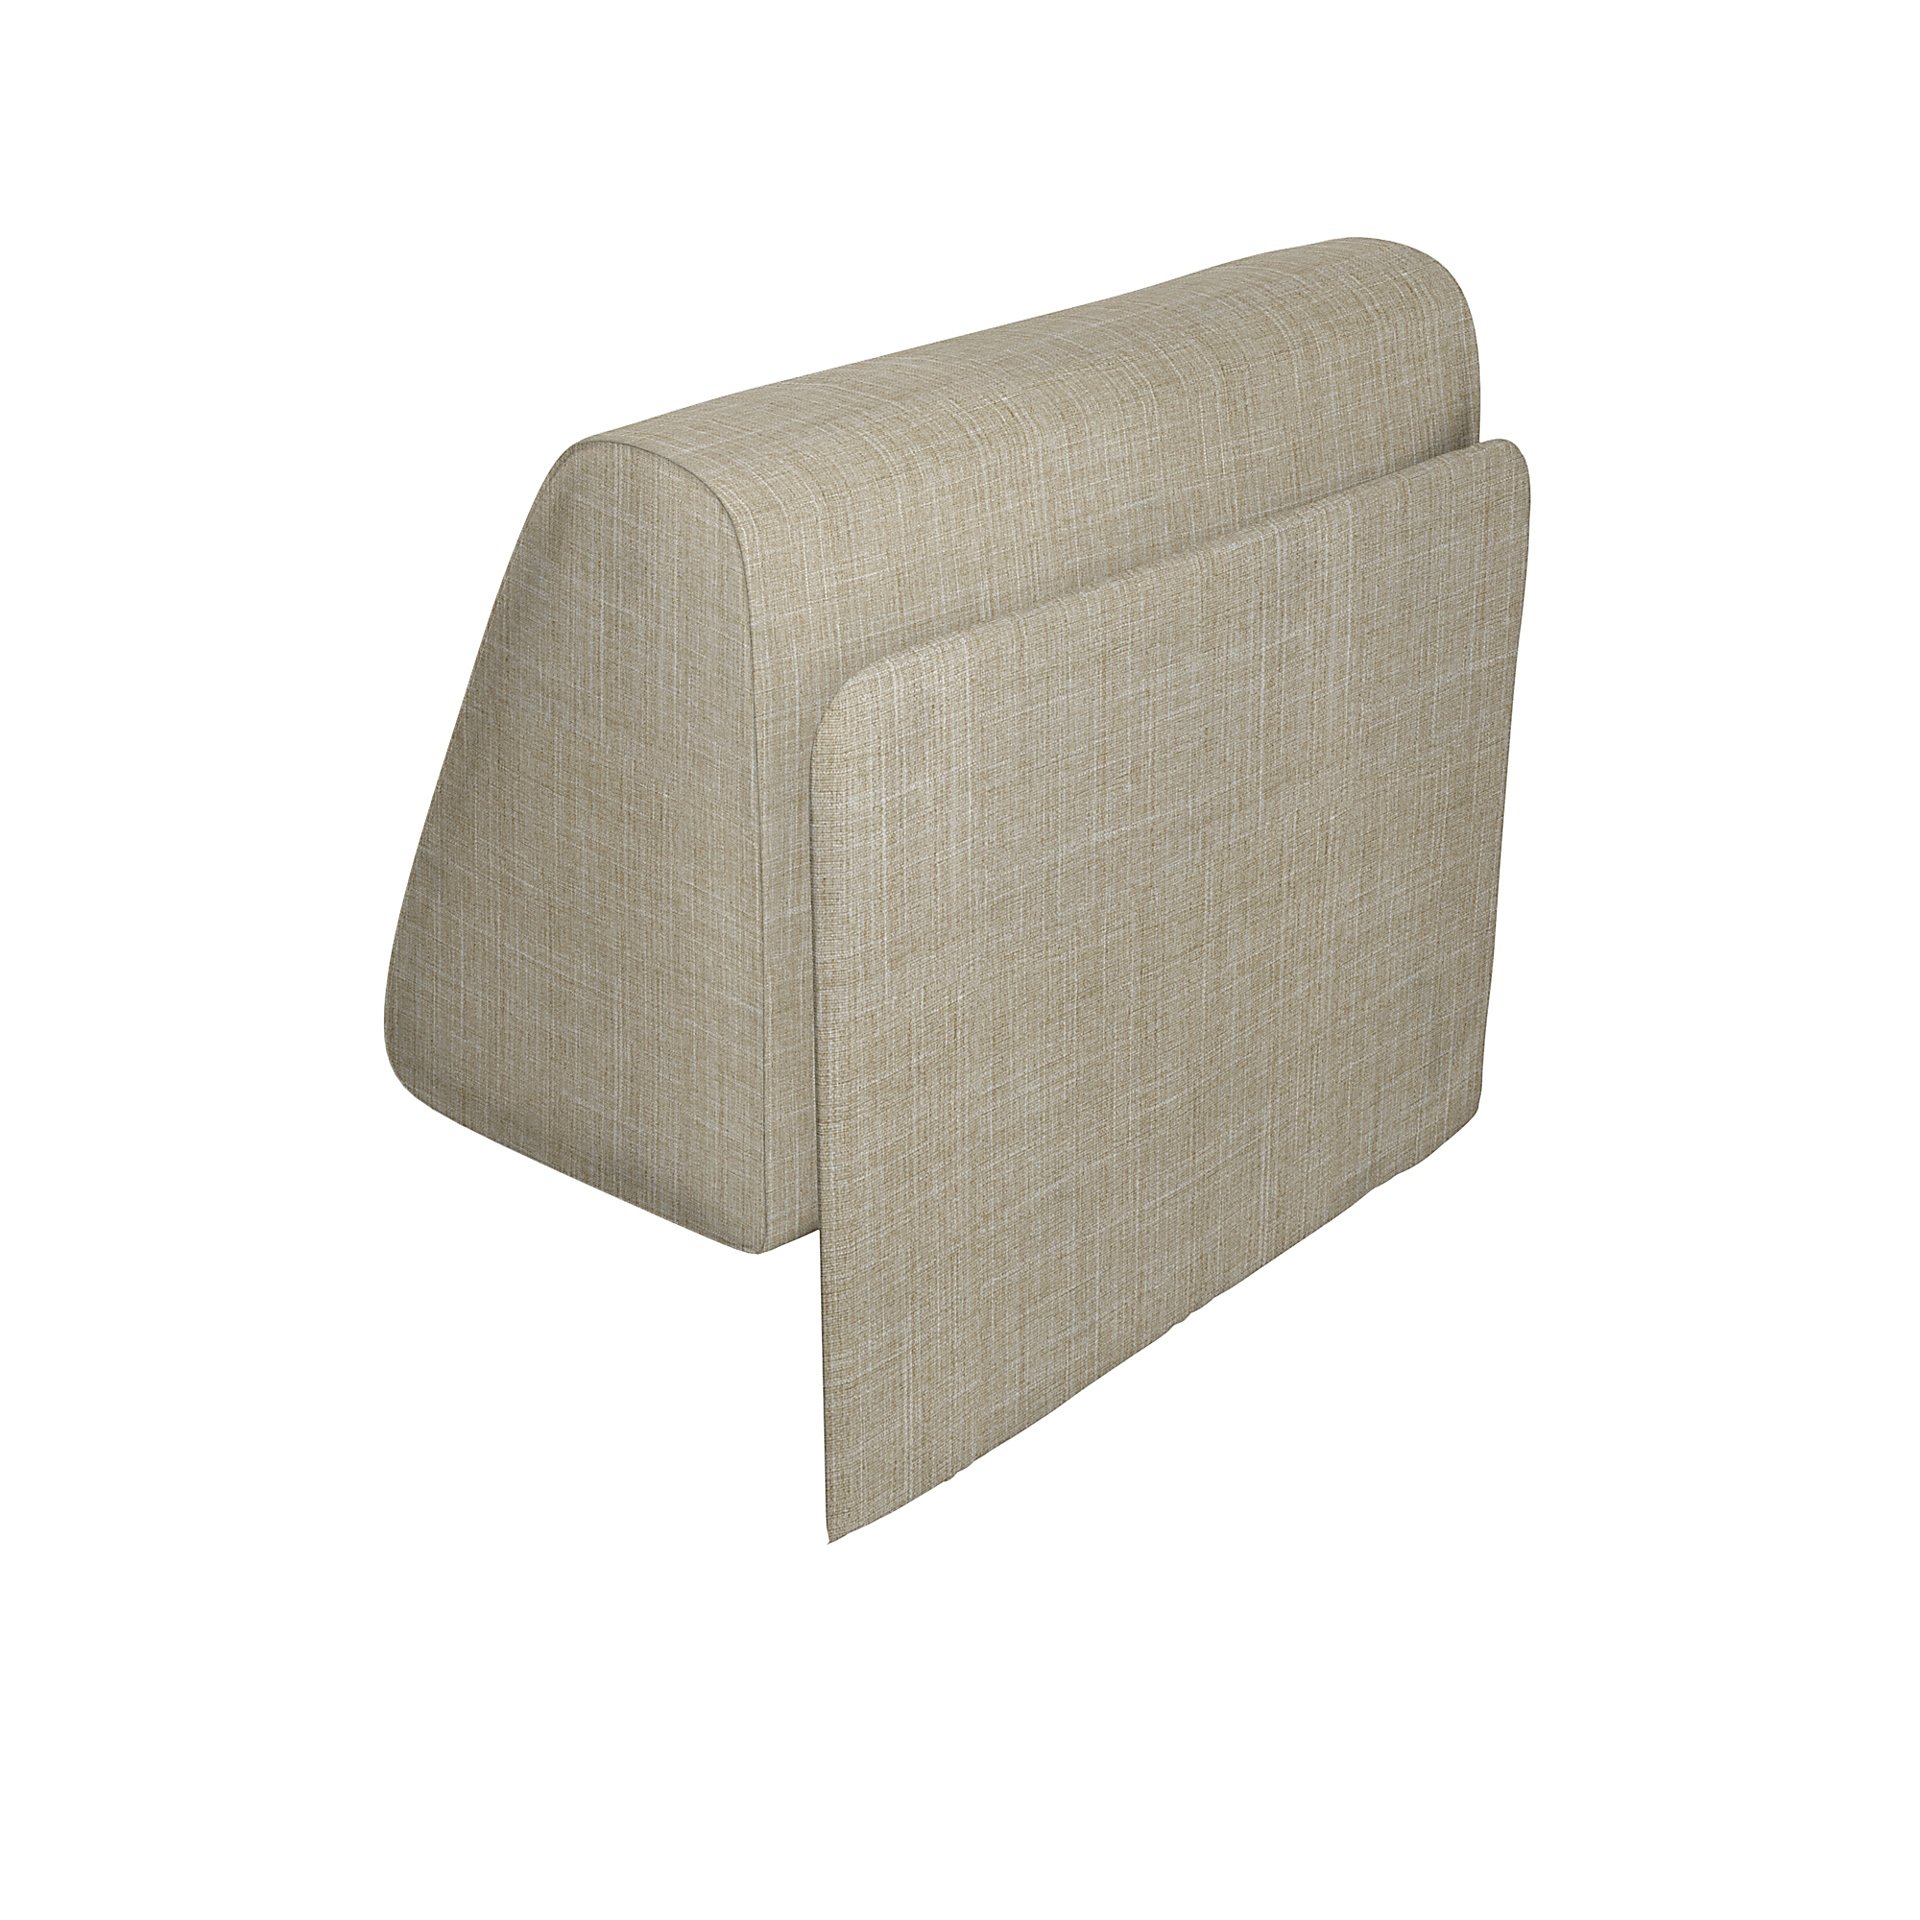 IKEA - Delaktig Backrest with Cushion Cover, Sand Beige, Boucle & Texture - Bemz